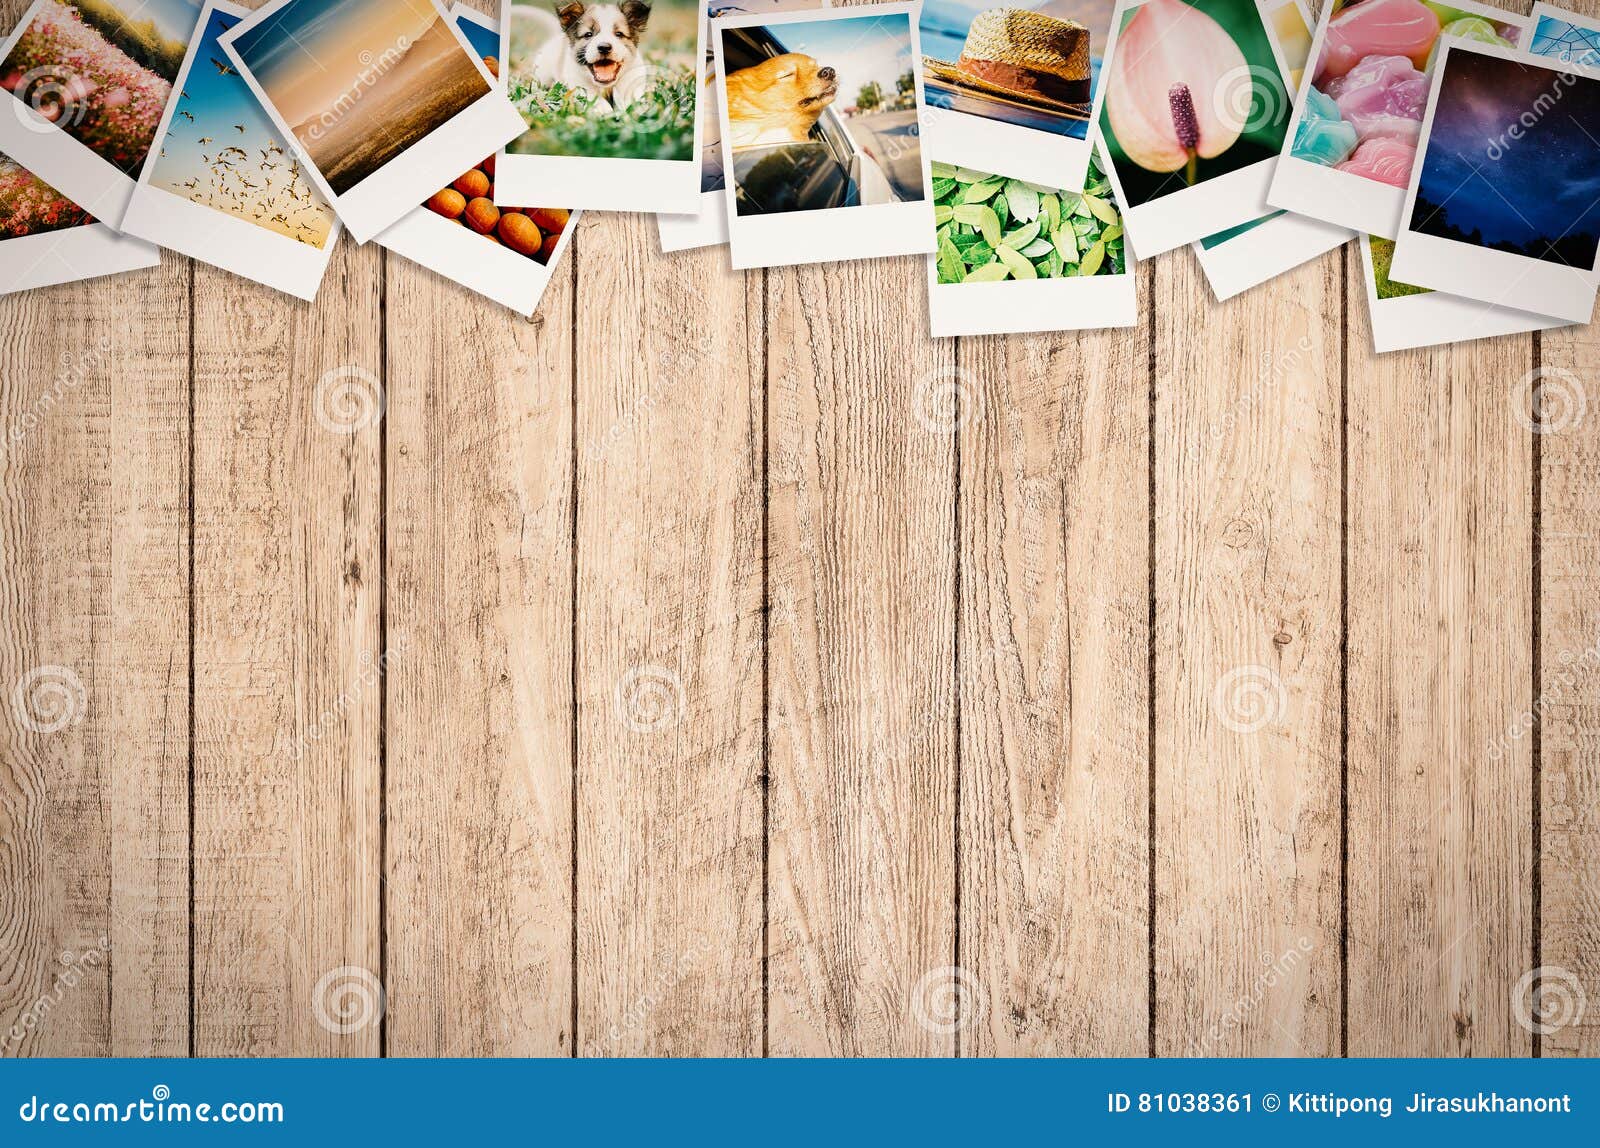 Travel photo collage stock image. Image of multimedia - 81038361